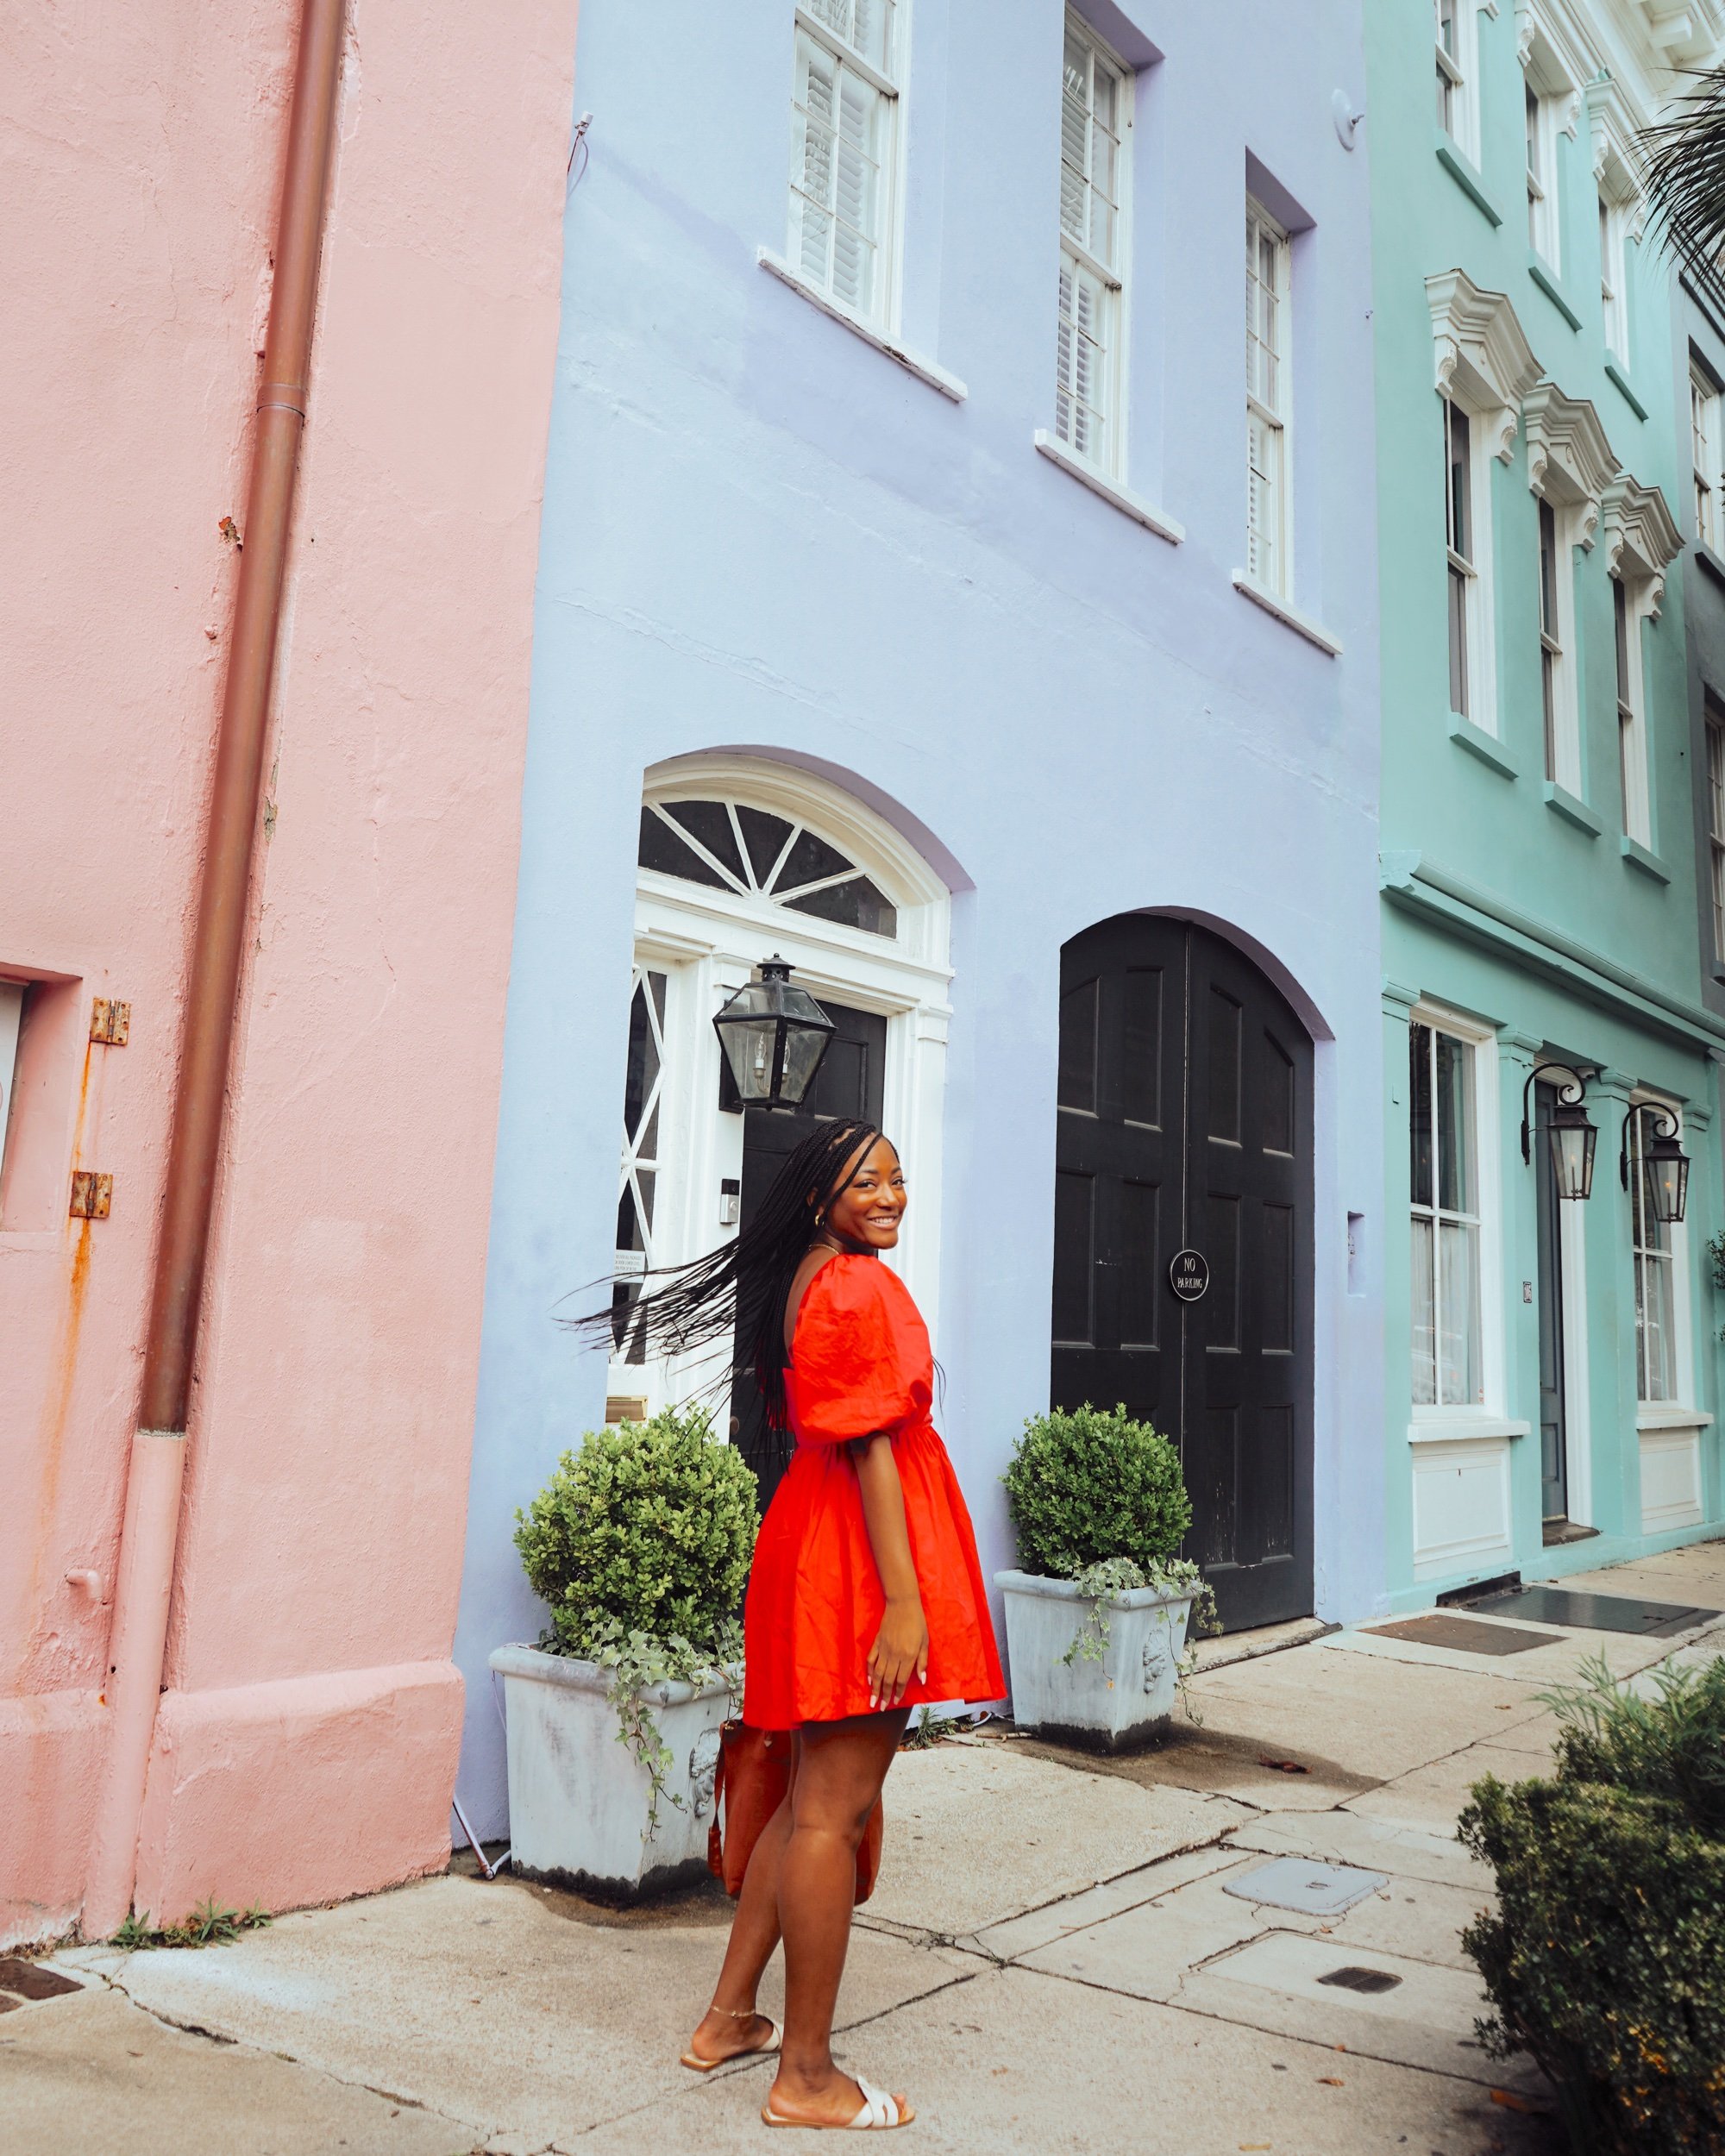 A Girls Guide To Charleston, South Carolina | Three Day Weekend Guide To Charleston